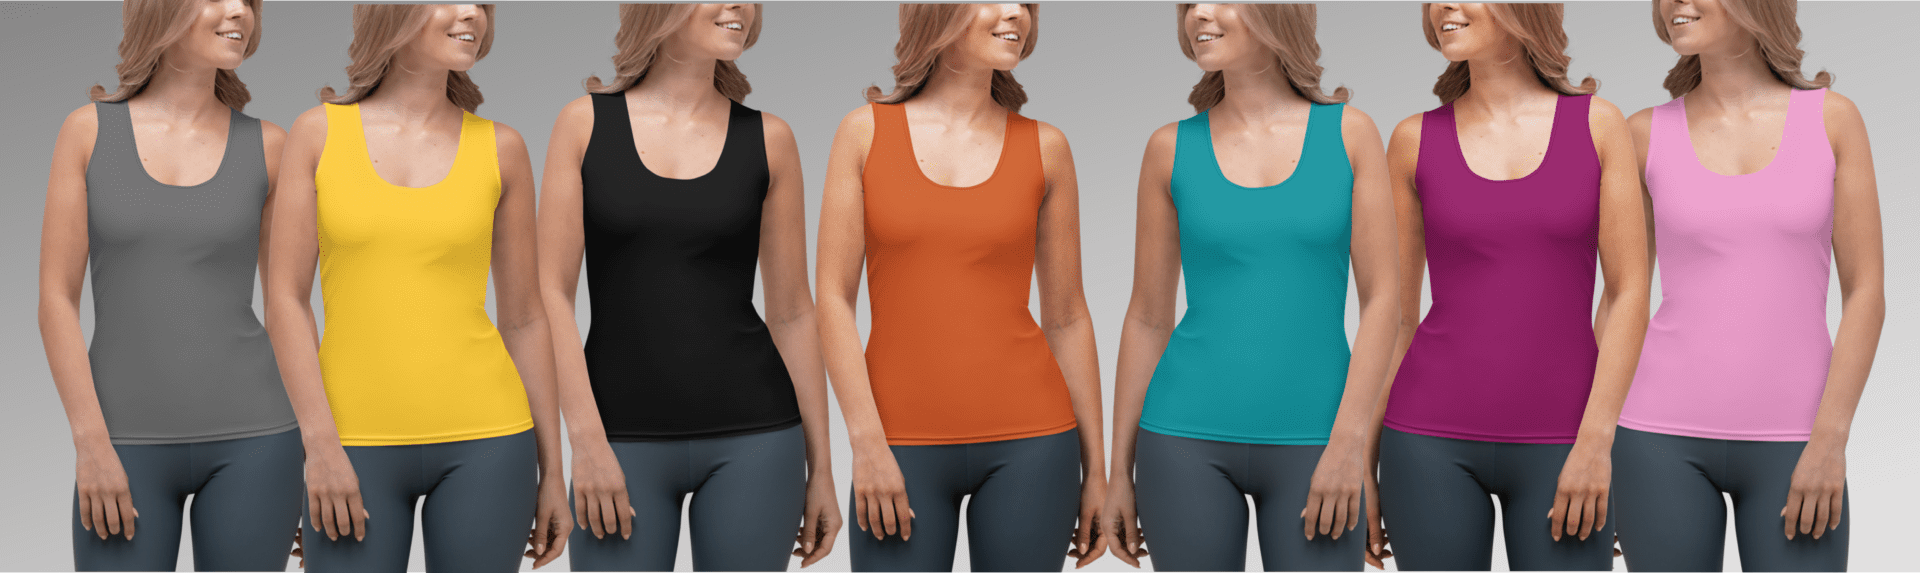 Women in colorful tank tops and leggings.